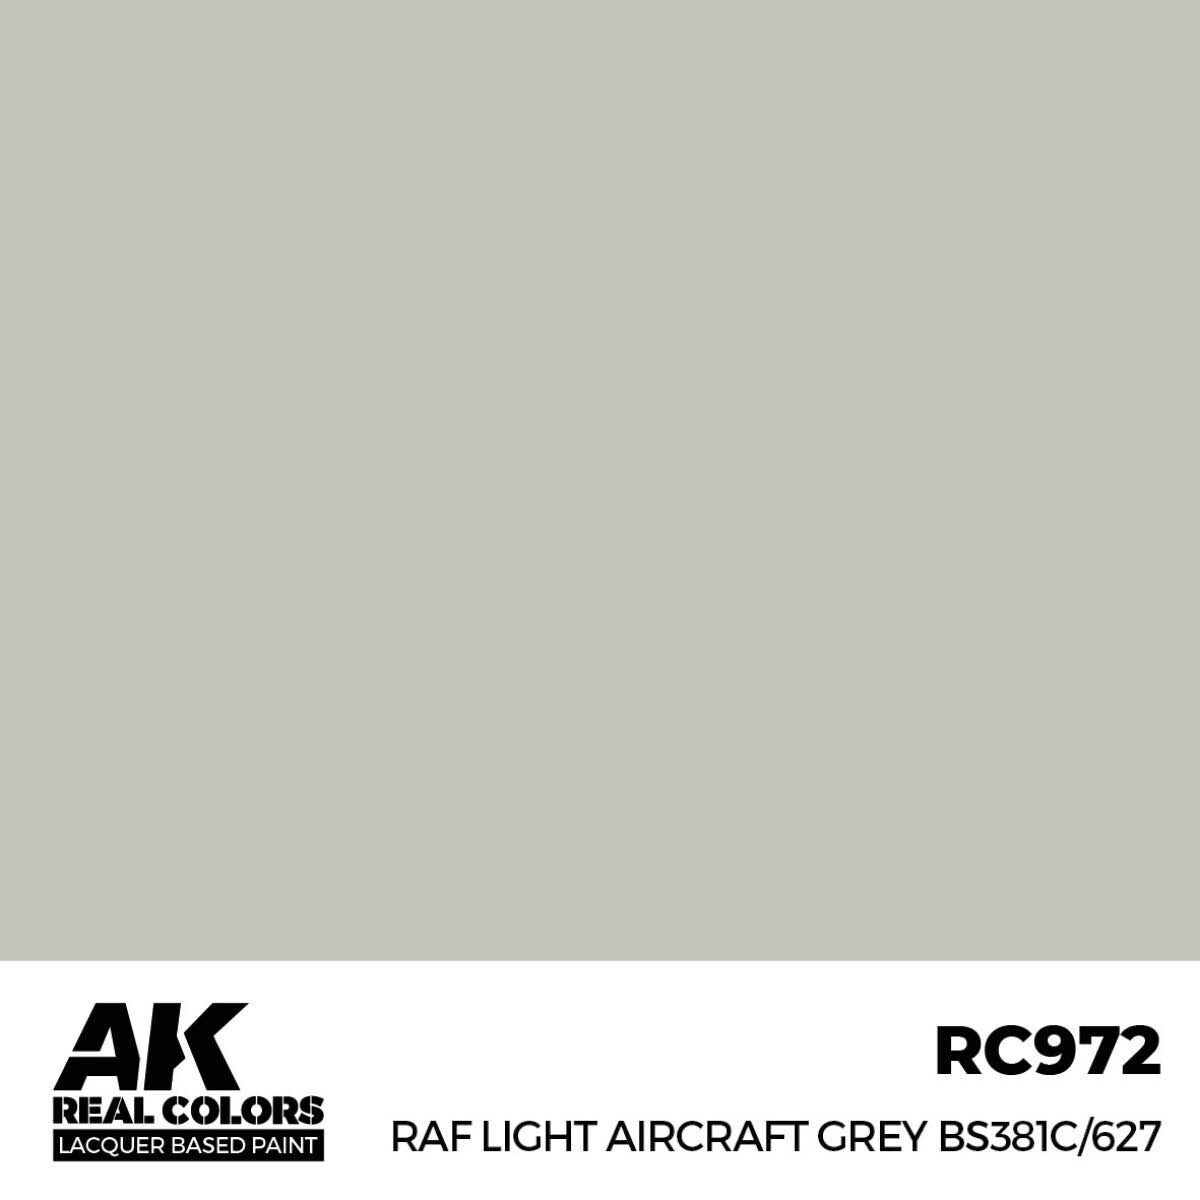 AK RC972 Real Colors RAF Light Aircraft Grey BS381C/627 17 ml.